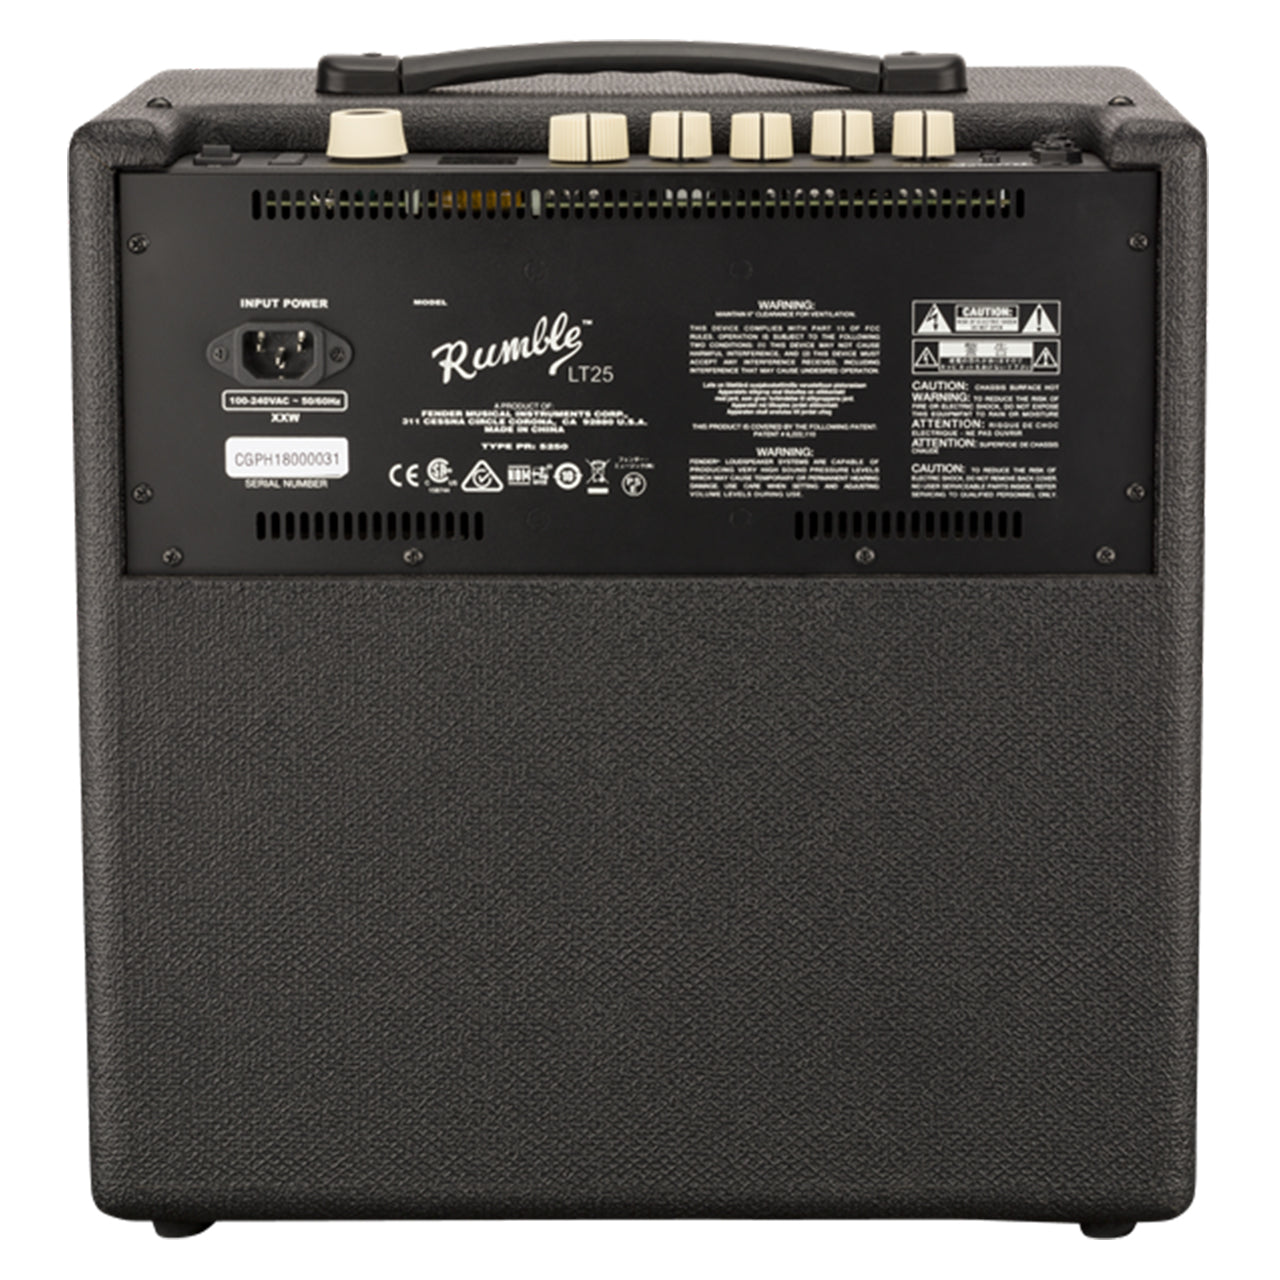 Fender Rumble LT25 Amplifier, Black, back